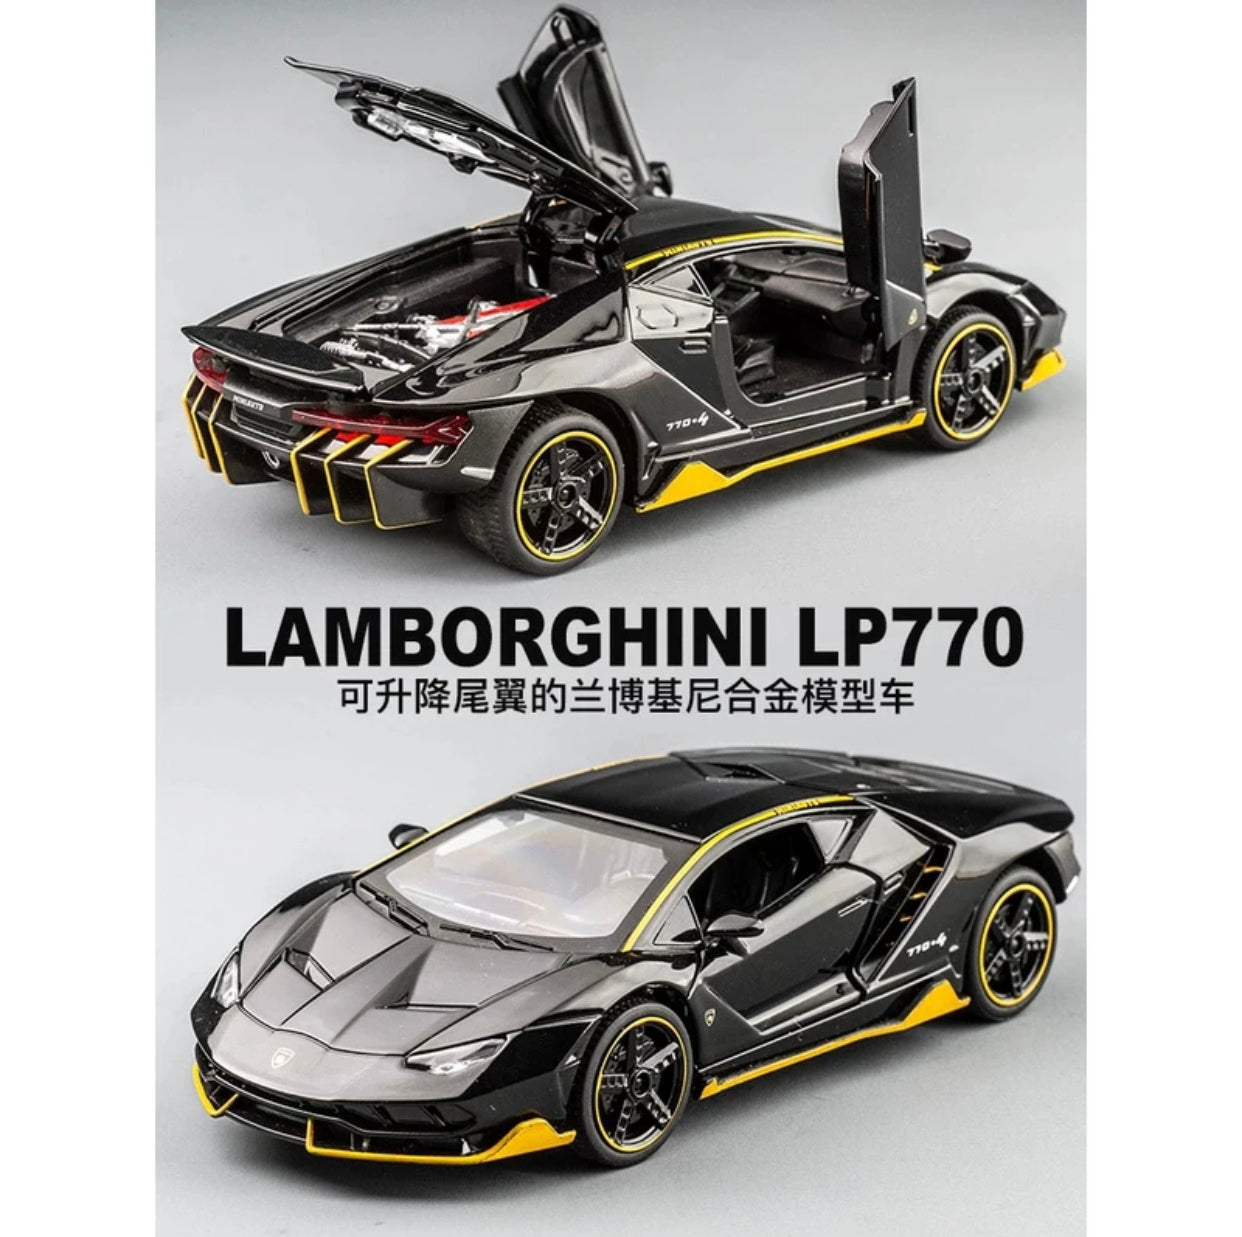 Lamborghini colección – The best store